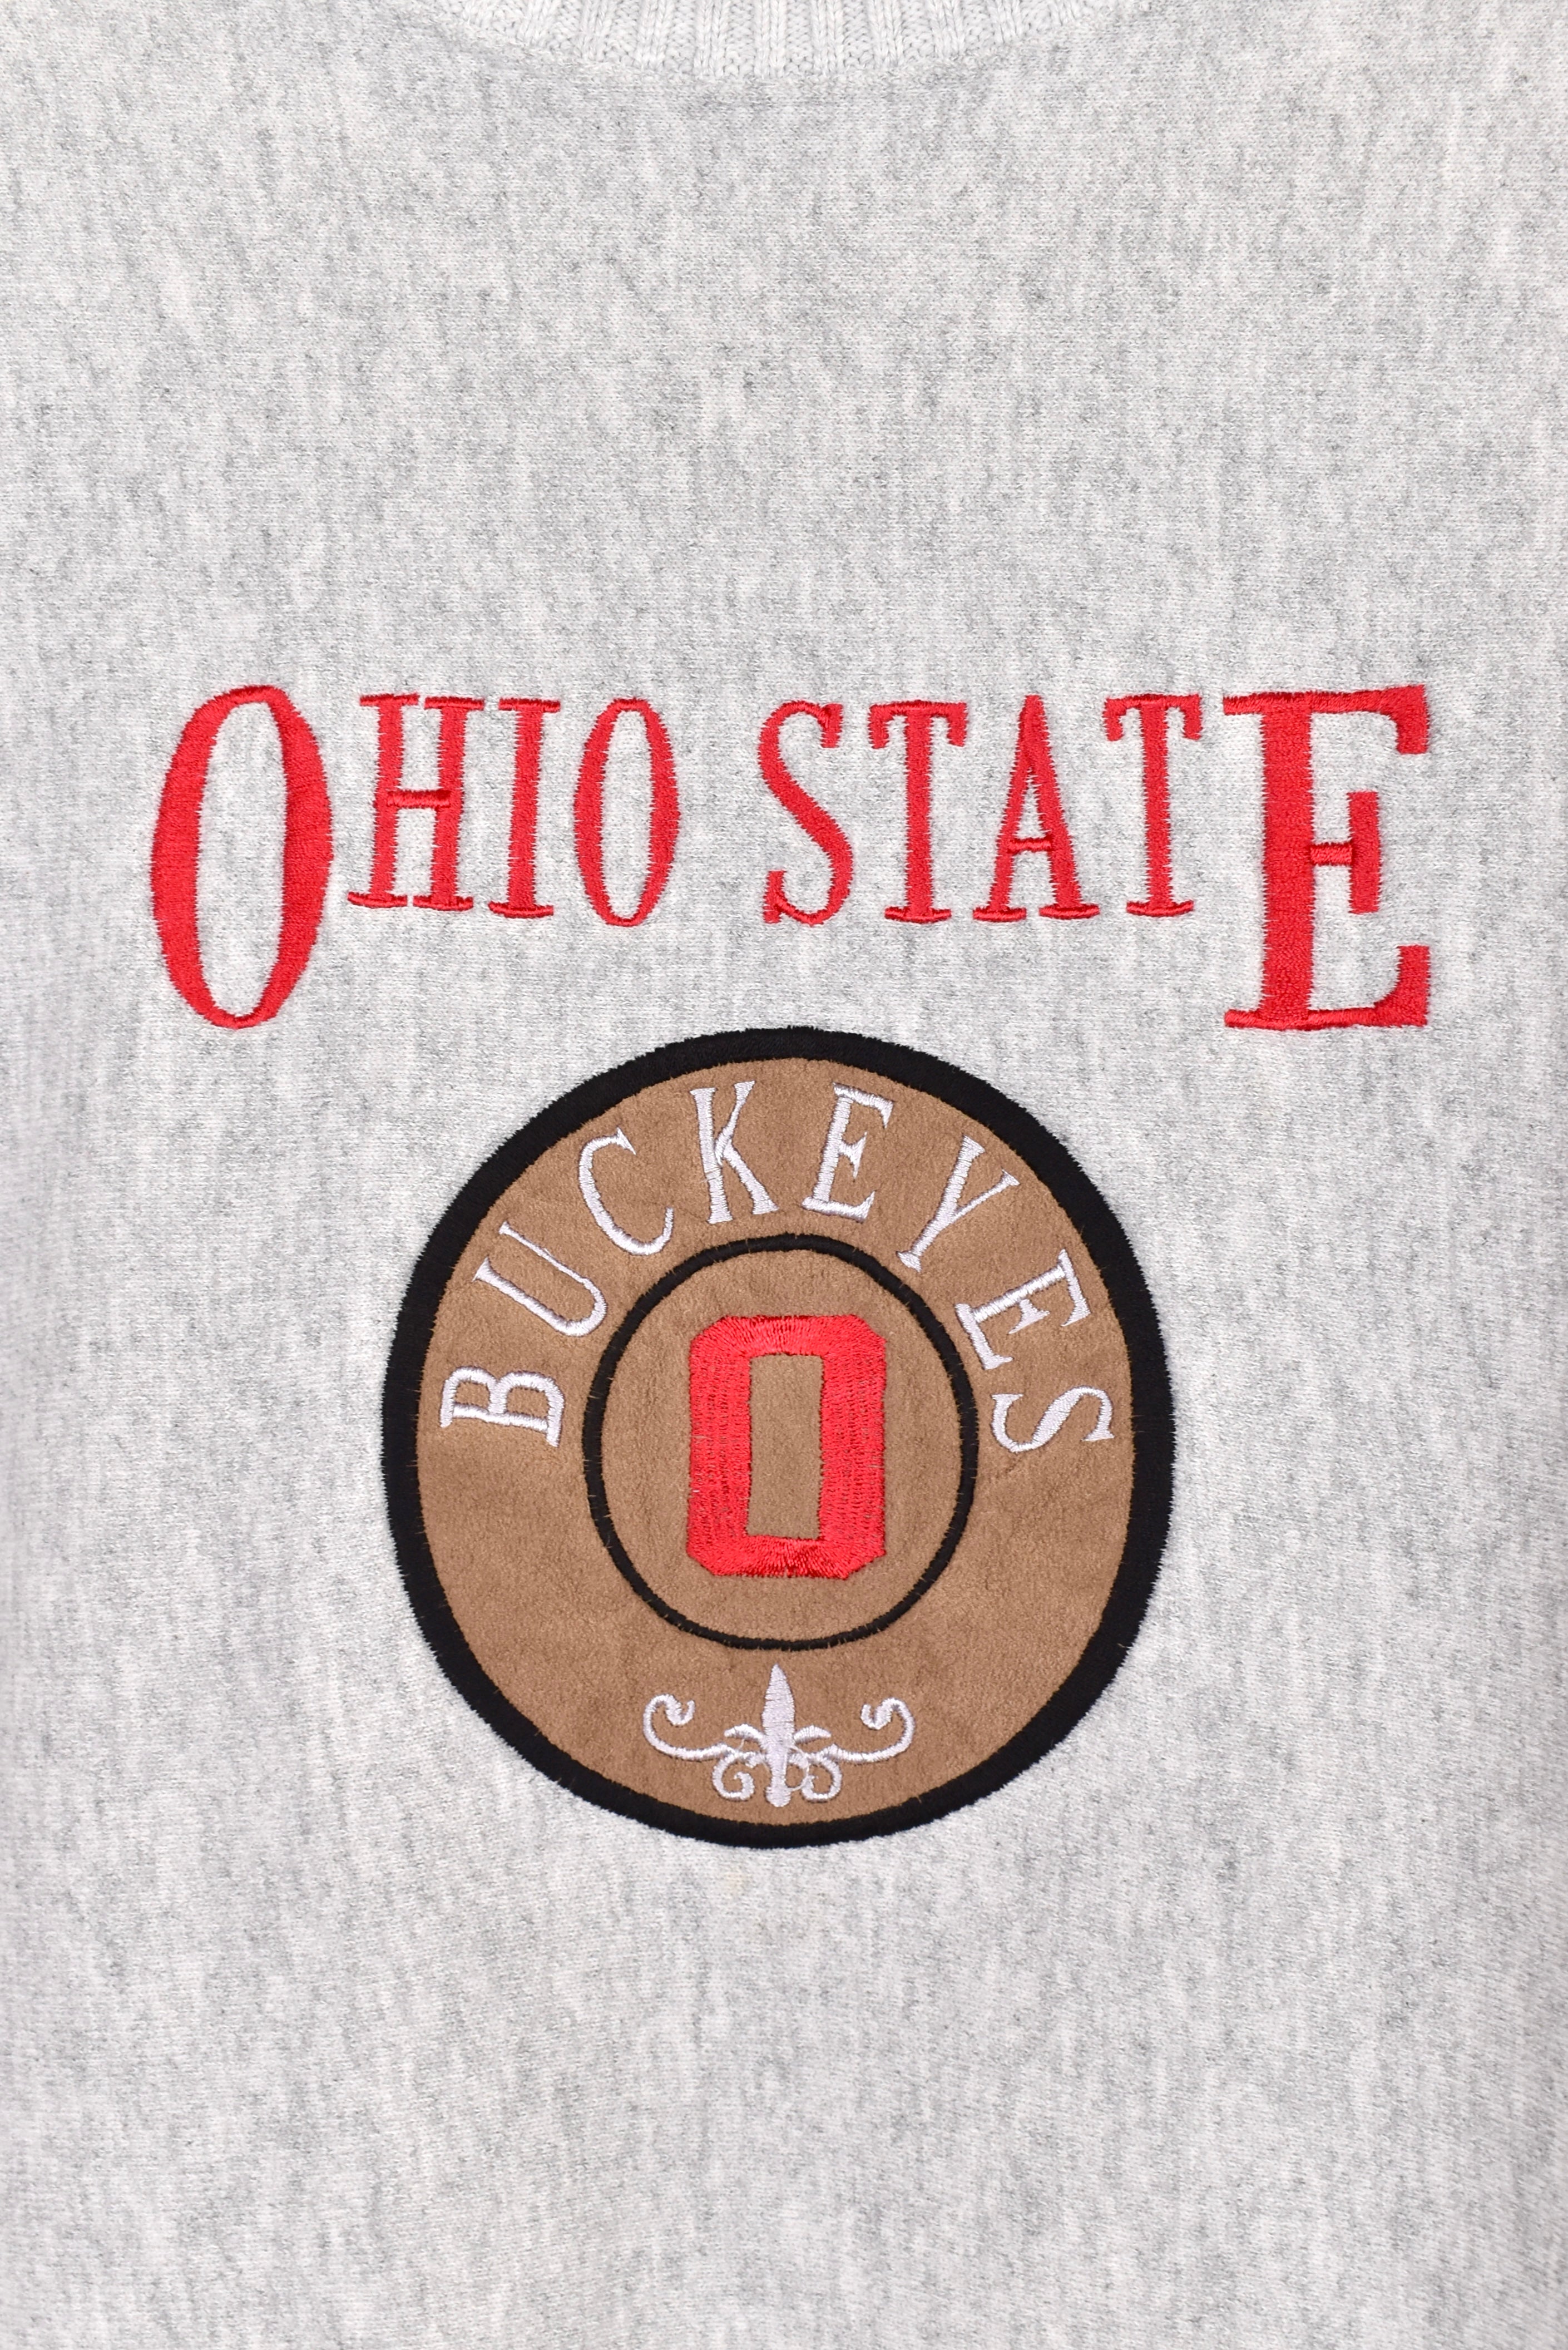 Vintage Ohio State University sweatshirt, grey embroidered crewneck - XL